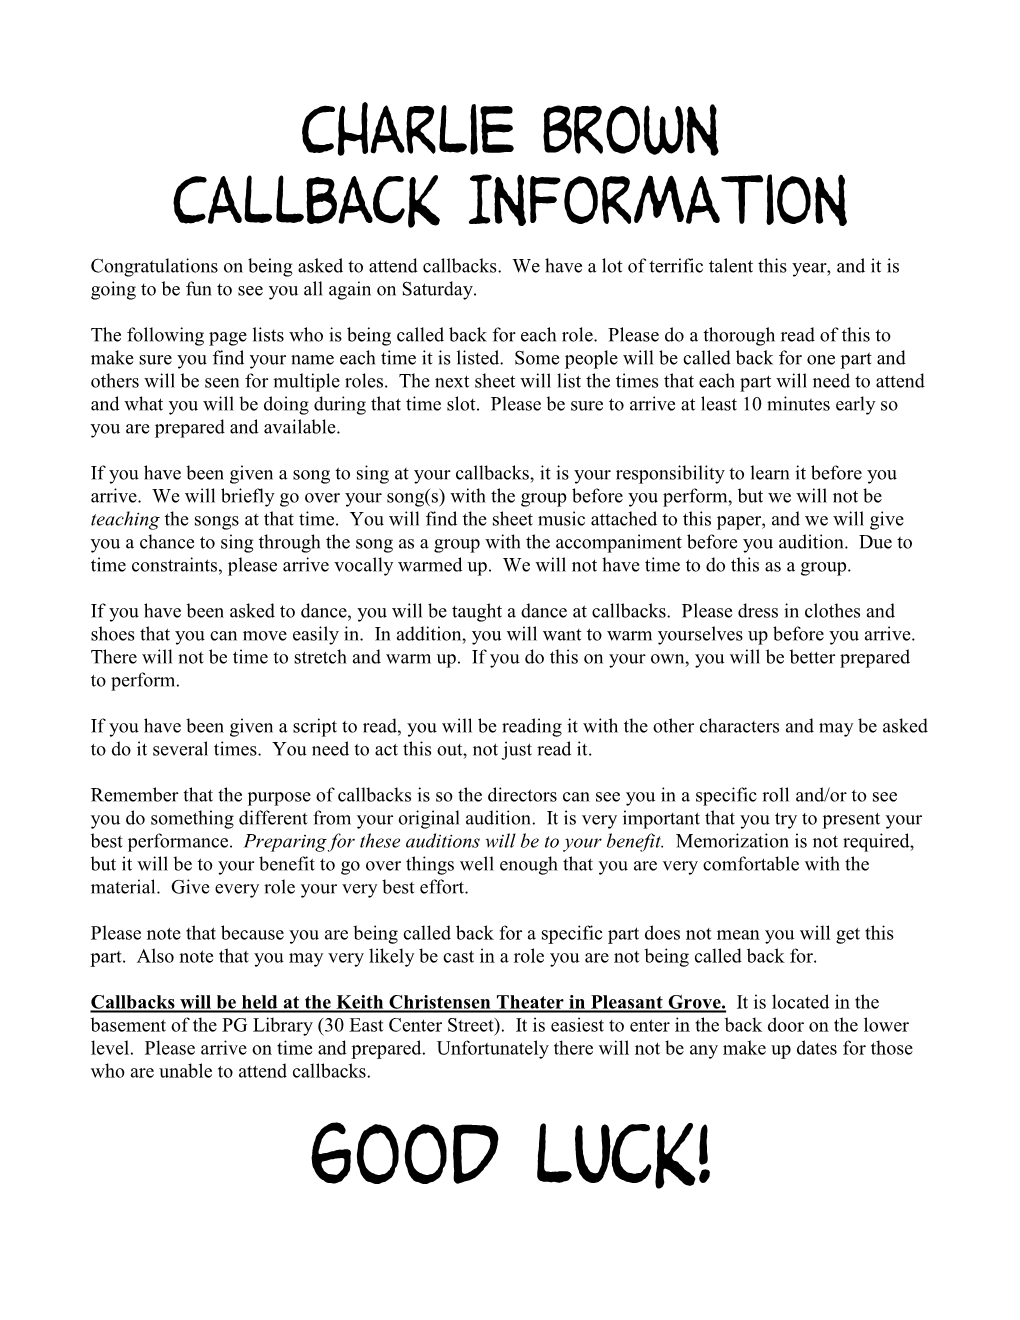 Good Luck! Callback Participants